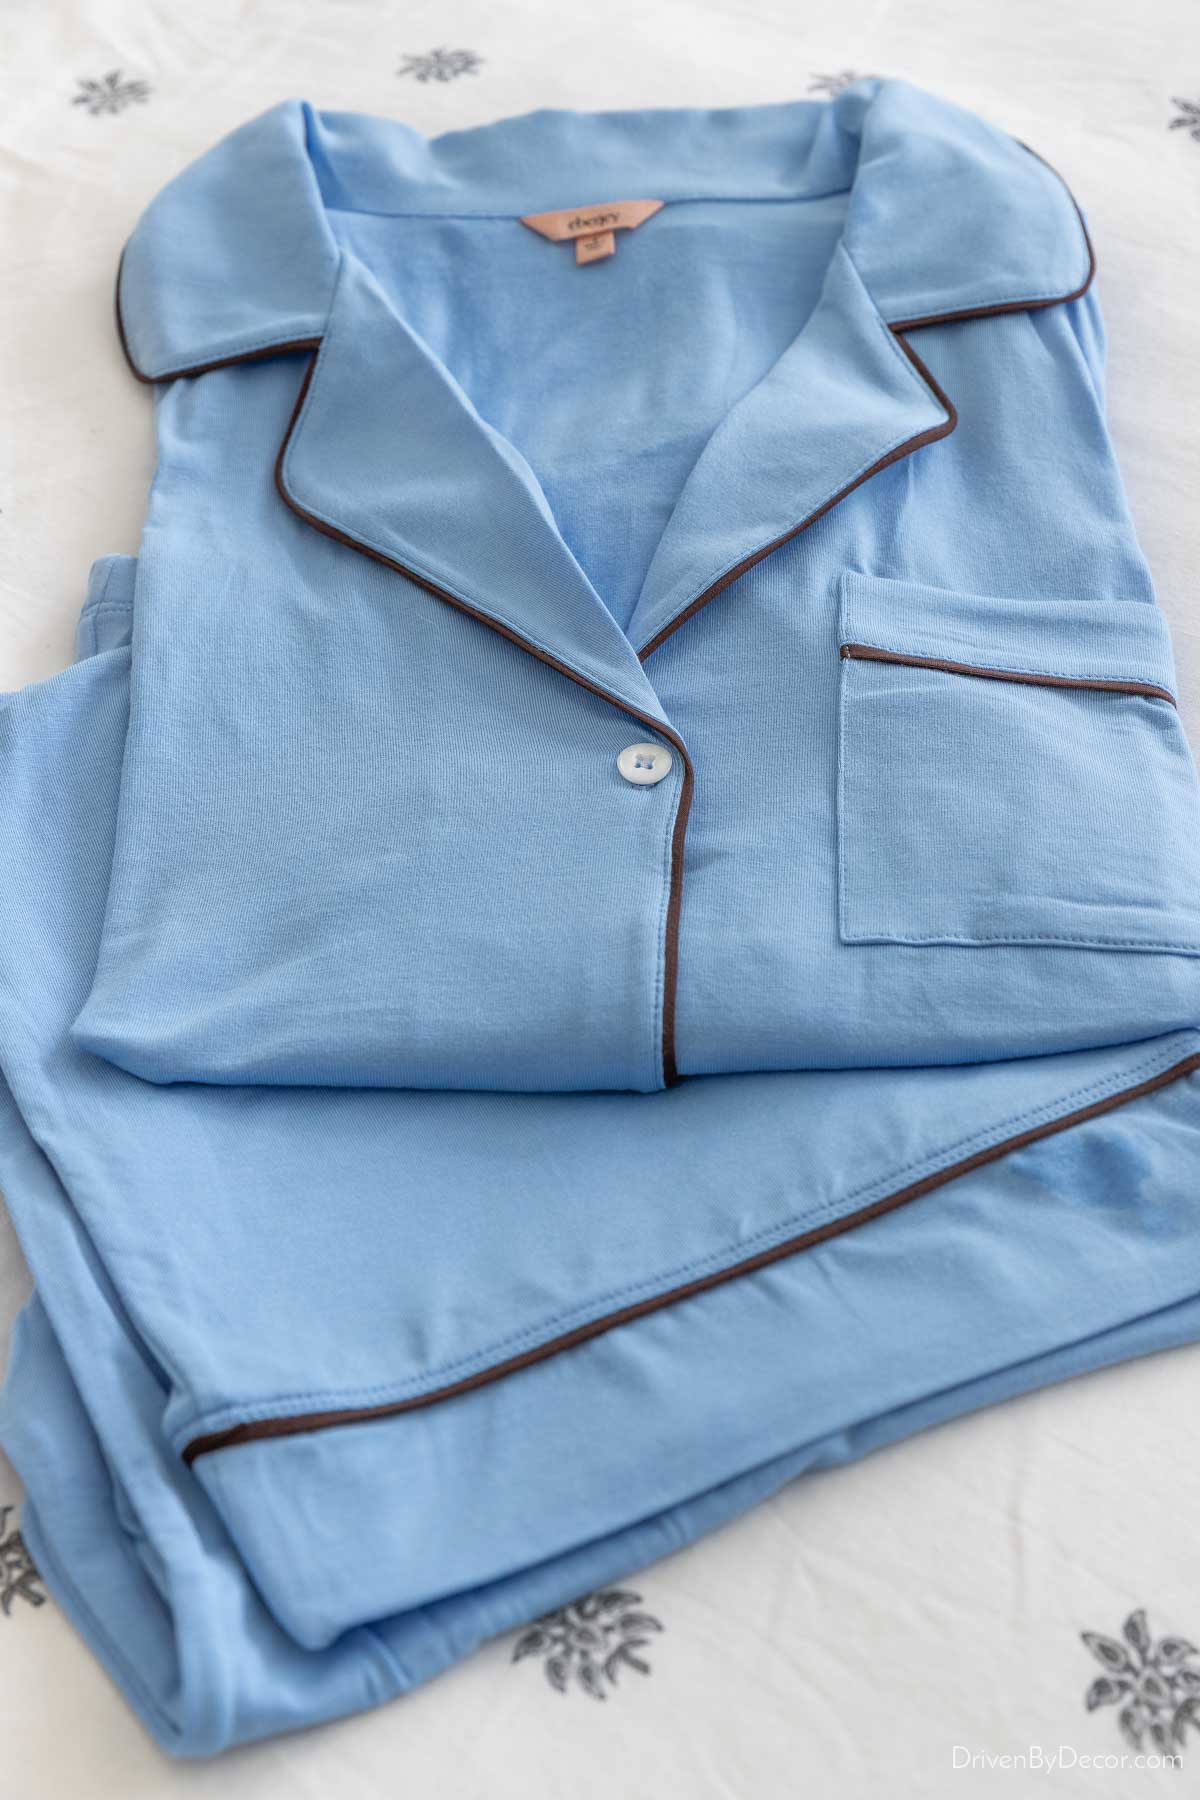 Light blue women's pajama set - super soft